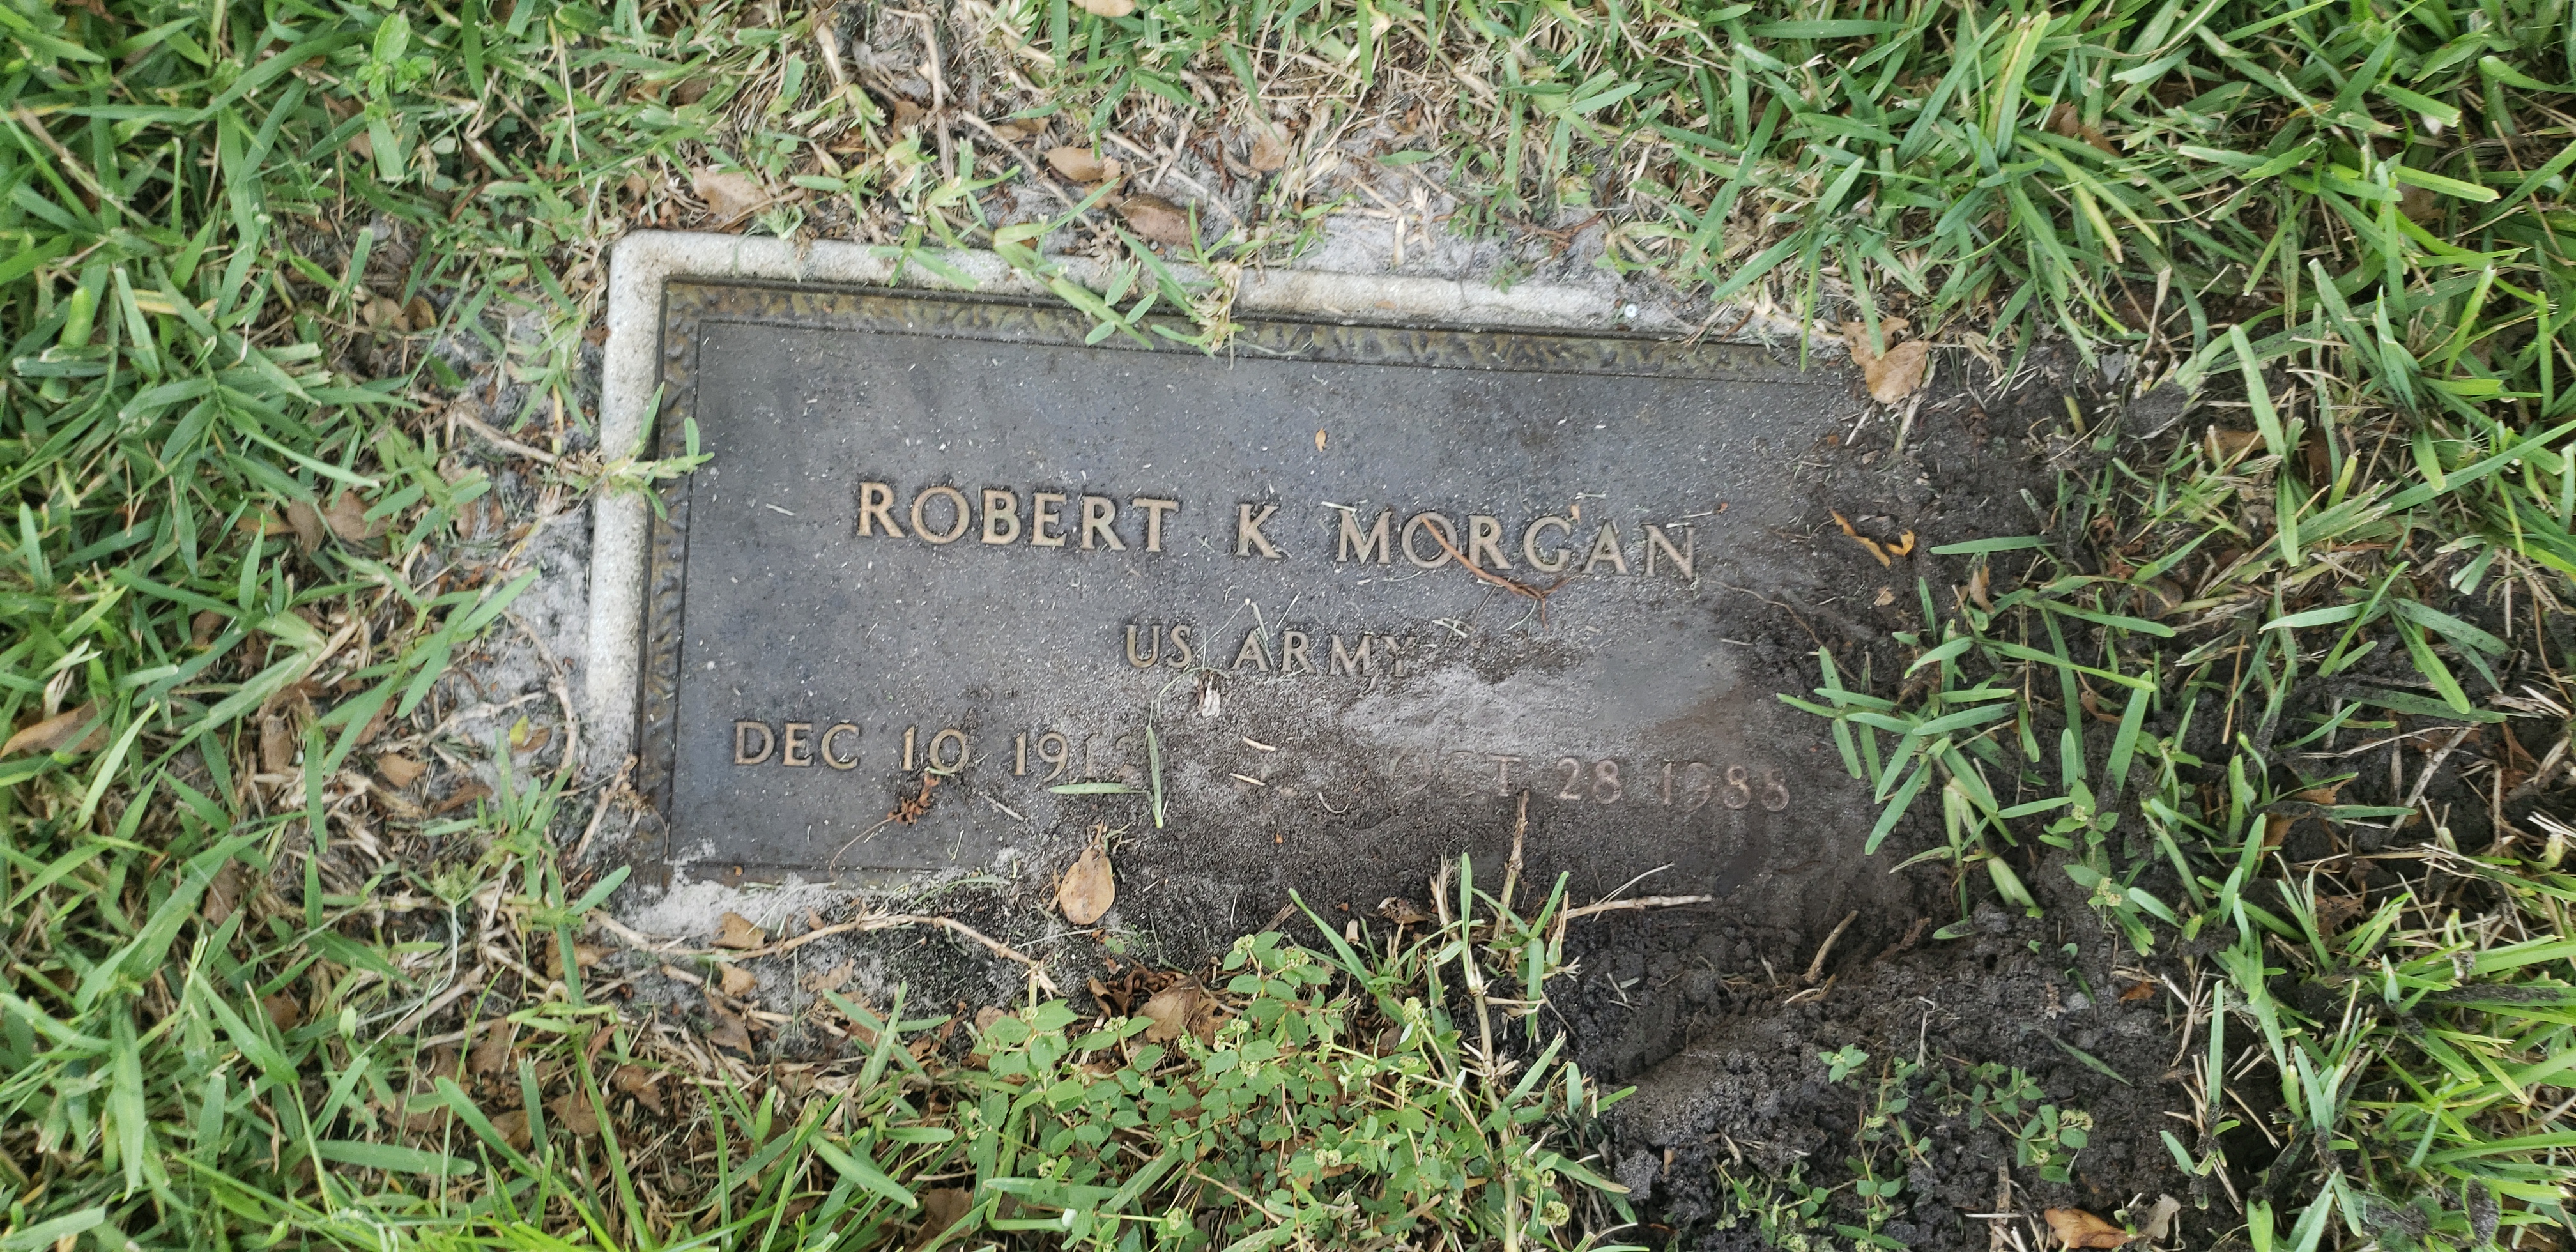 Robert K Morgan